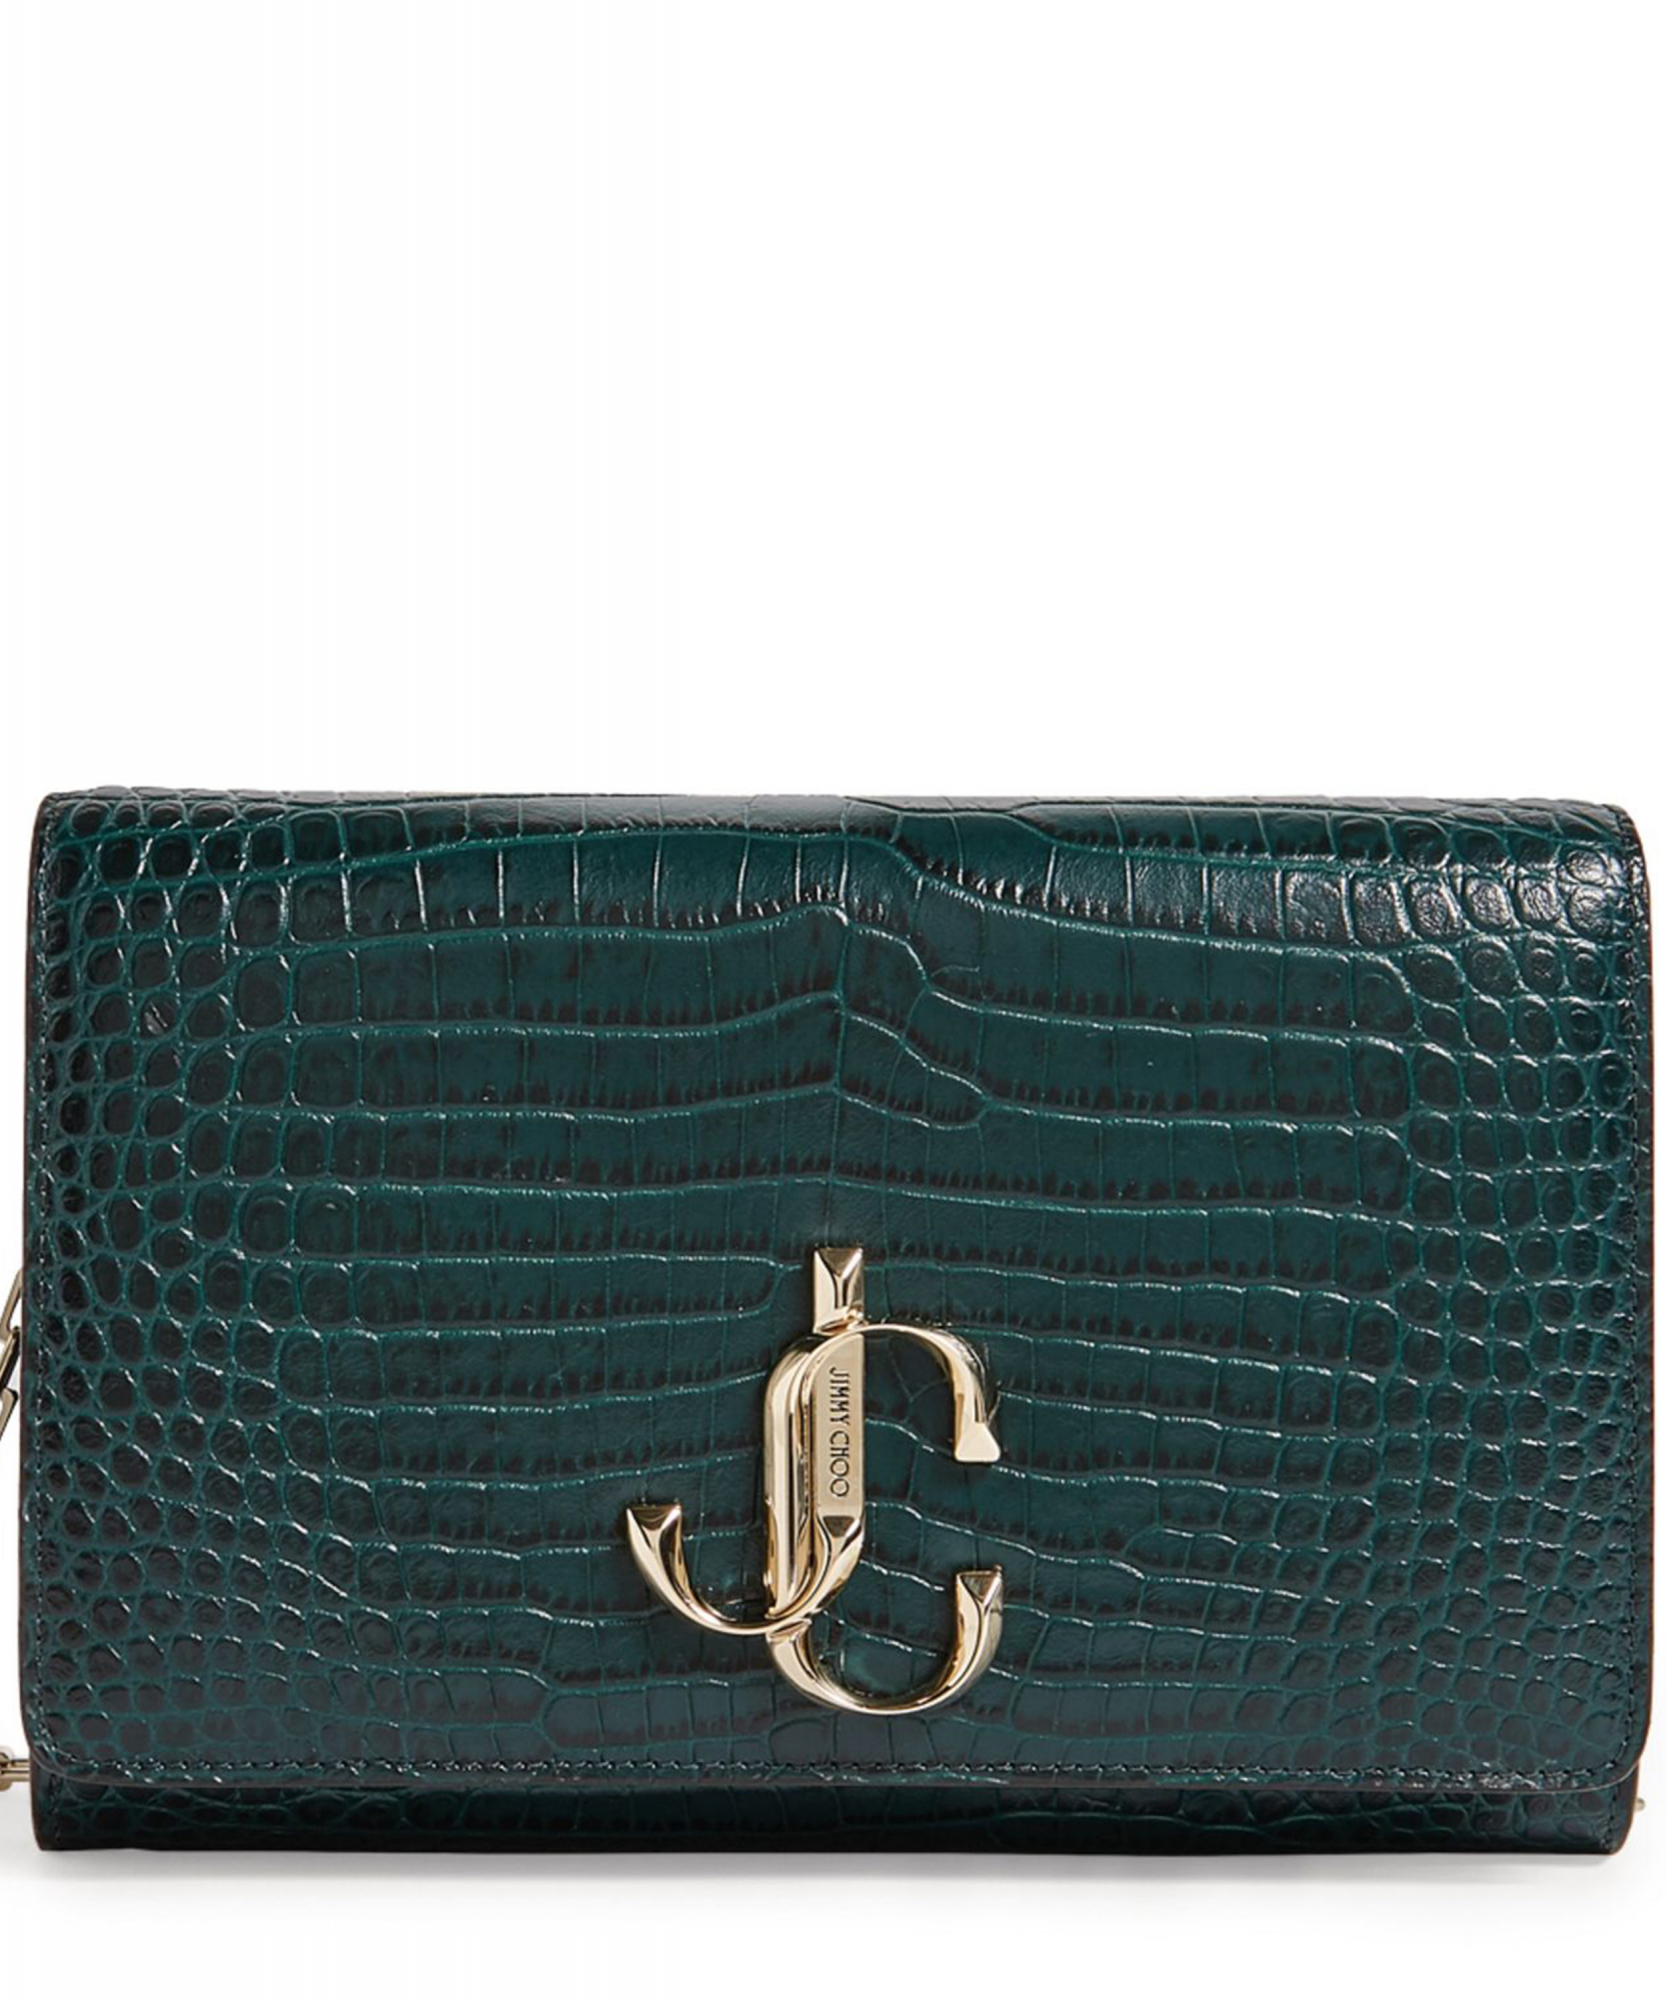 Women's Luxury Bags - Jimmy Choo Green Croc Shoulder Bag